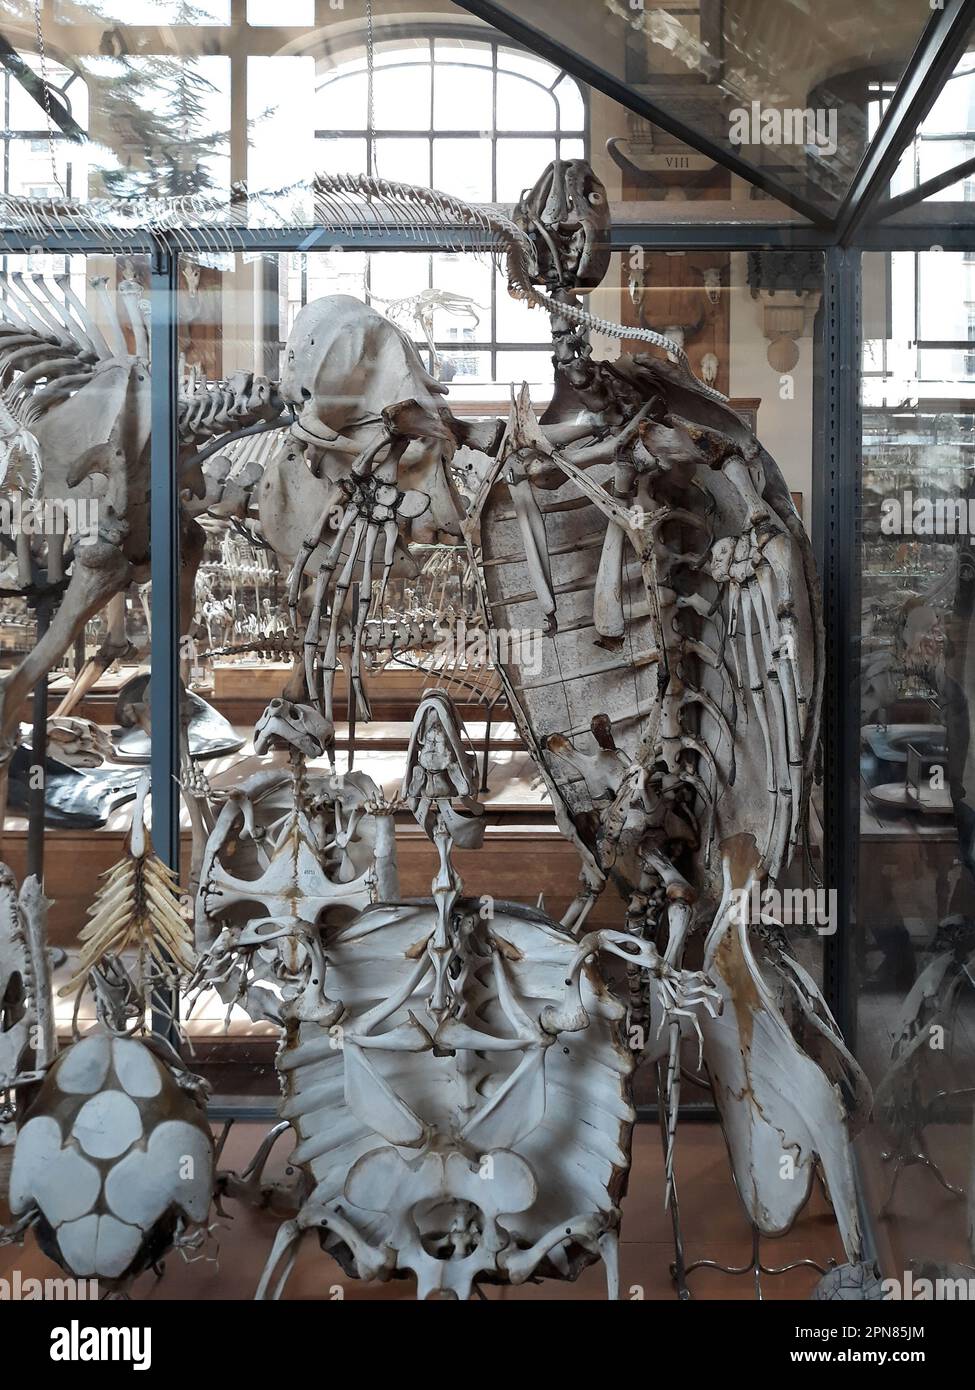 Skeleton of mammal, natural history museum, Paris, France. Stock Photo